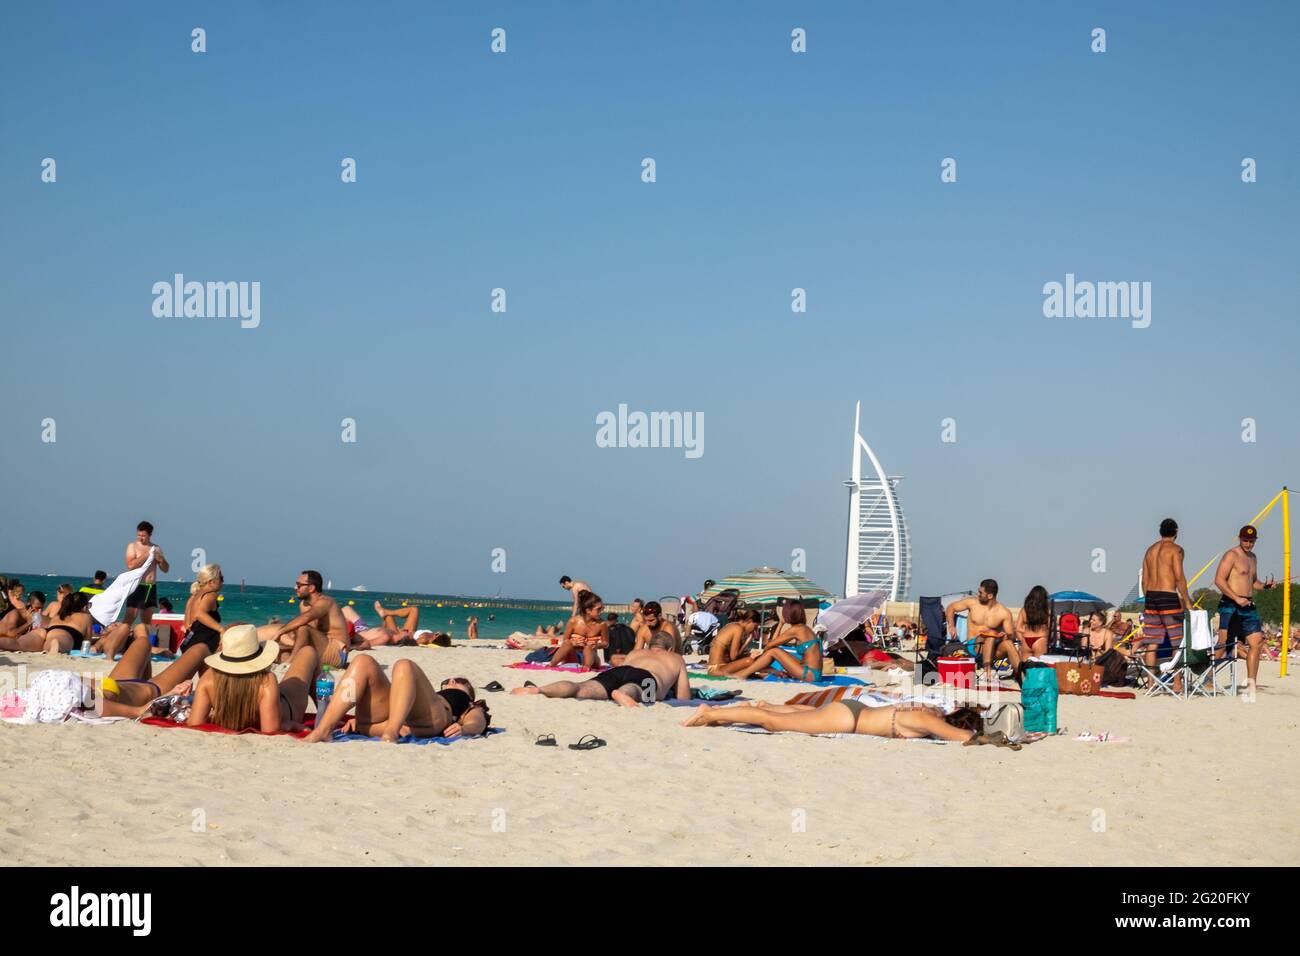 People sunbathing on the beach in Dubai with the white sail ob Burj Al Arab in the background. Dubai, UAE. Stock Photo